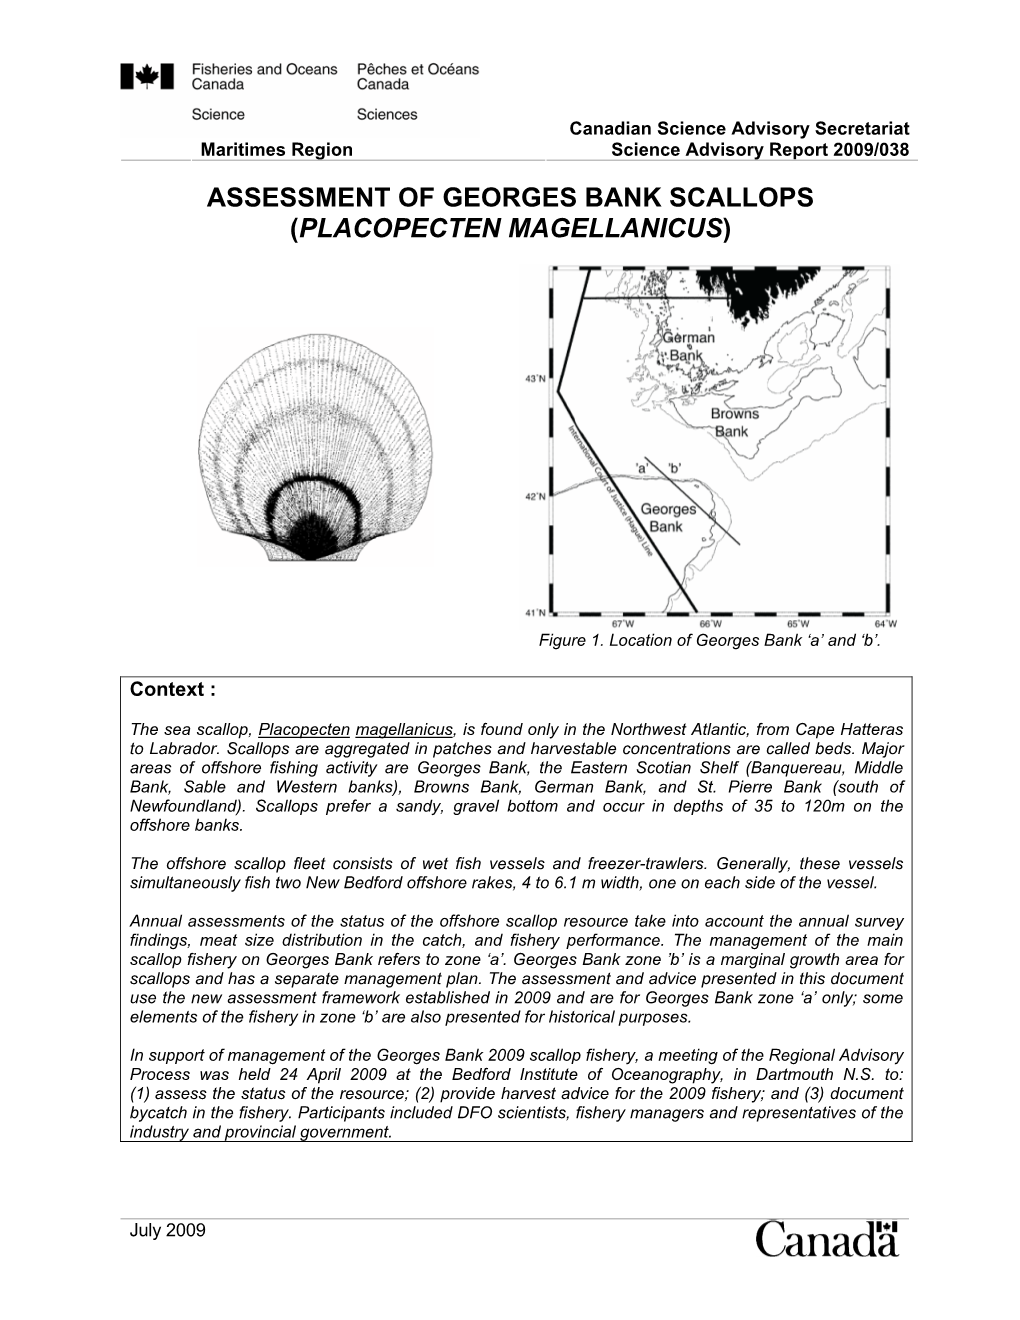 Assessment of Georges Bank Scallops (Placopecten Magellanicus)